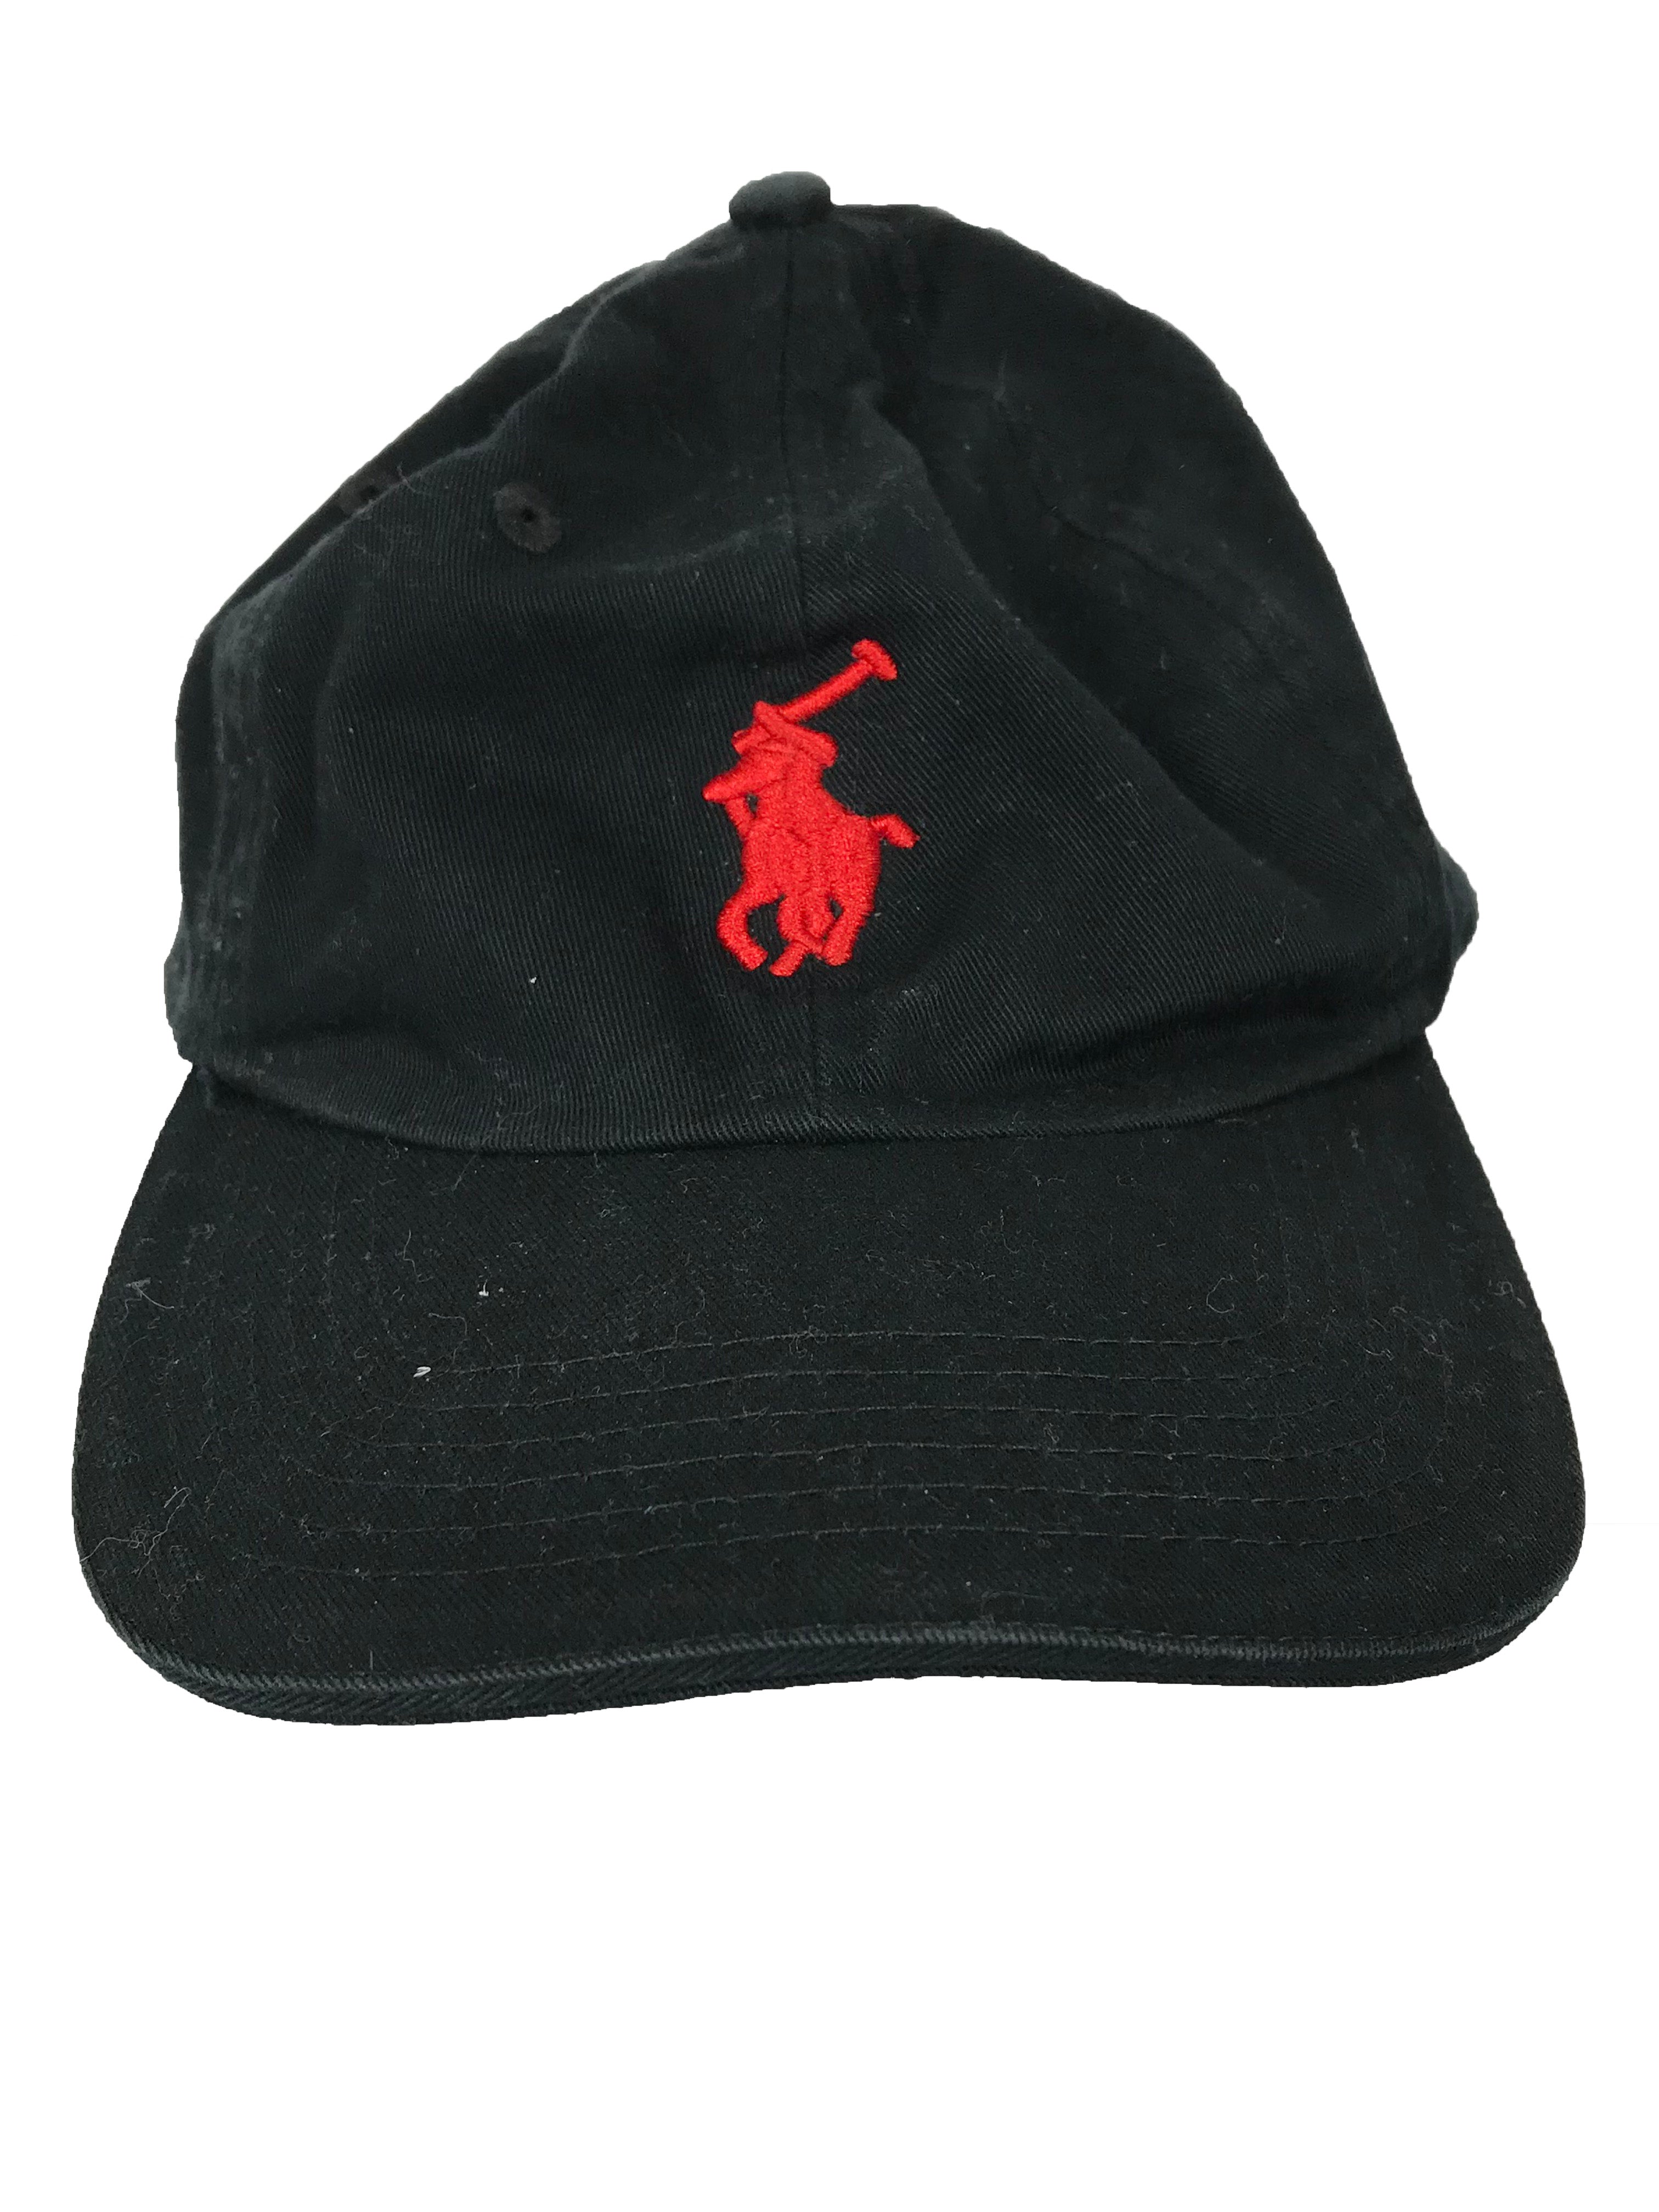 Polo by Ralph Lauren Black Adjustable Hat